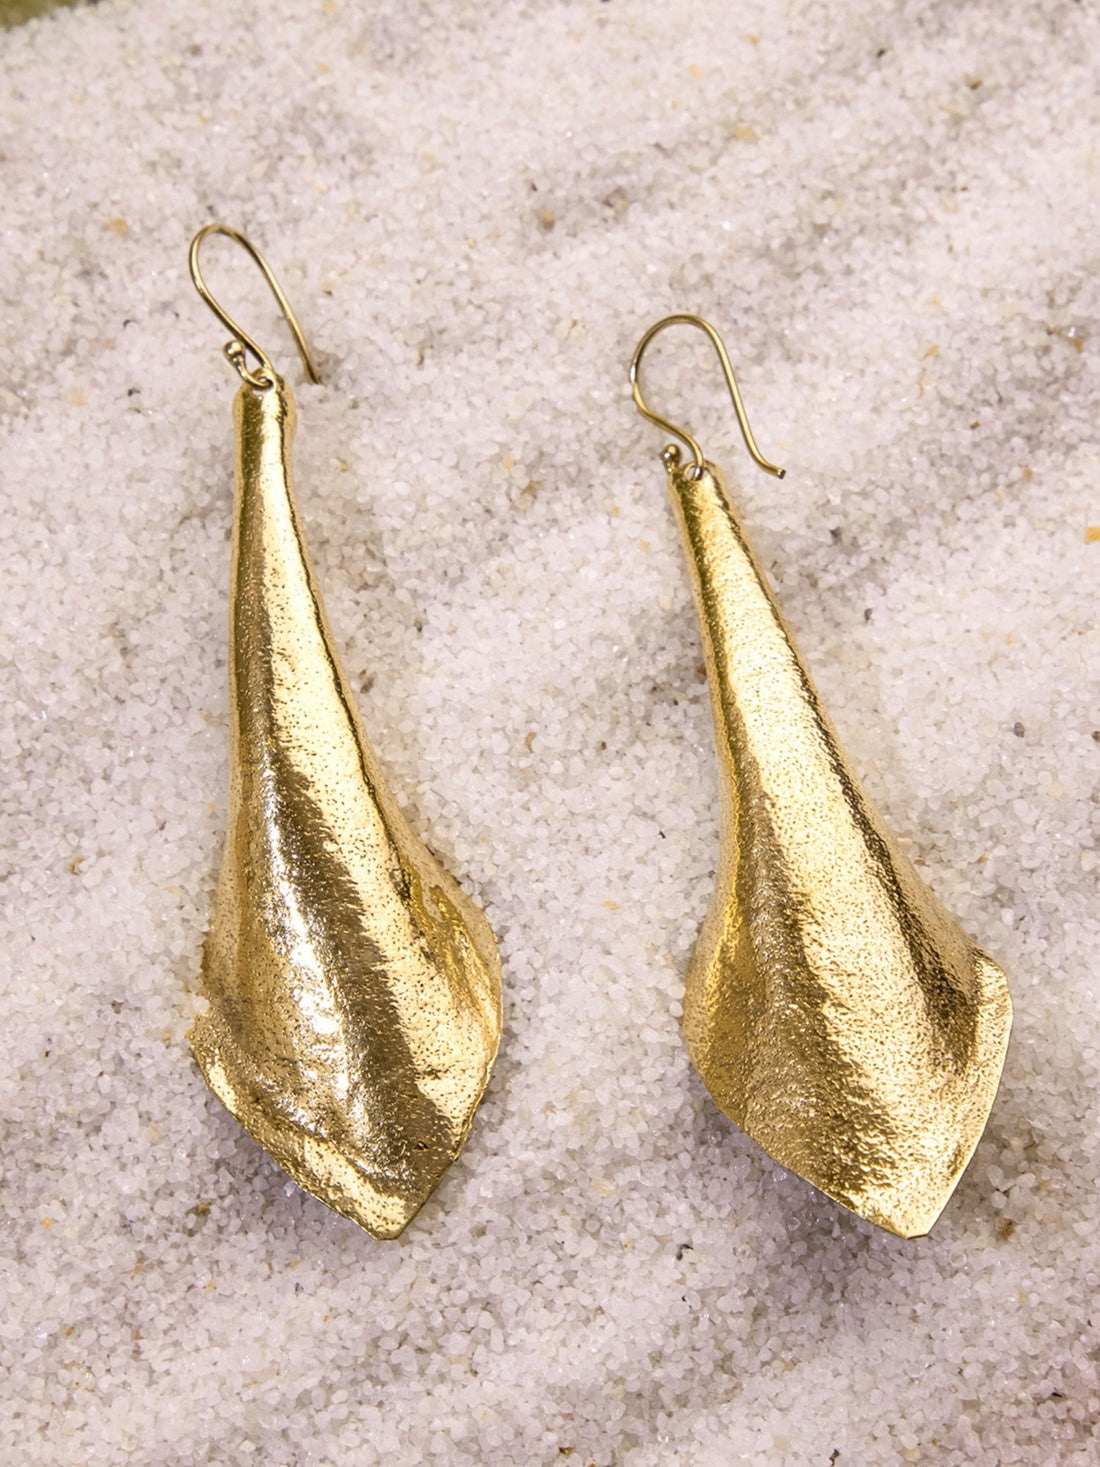 Daily Wear Drops and Danglers Earrings - Minimal Gold-Plated Brass Earrings By Studio One Love